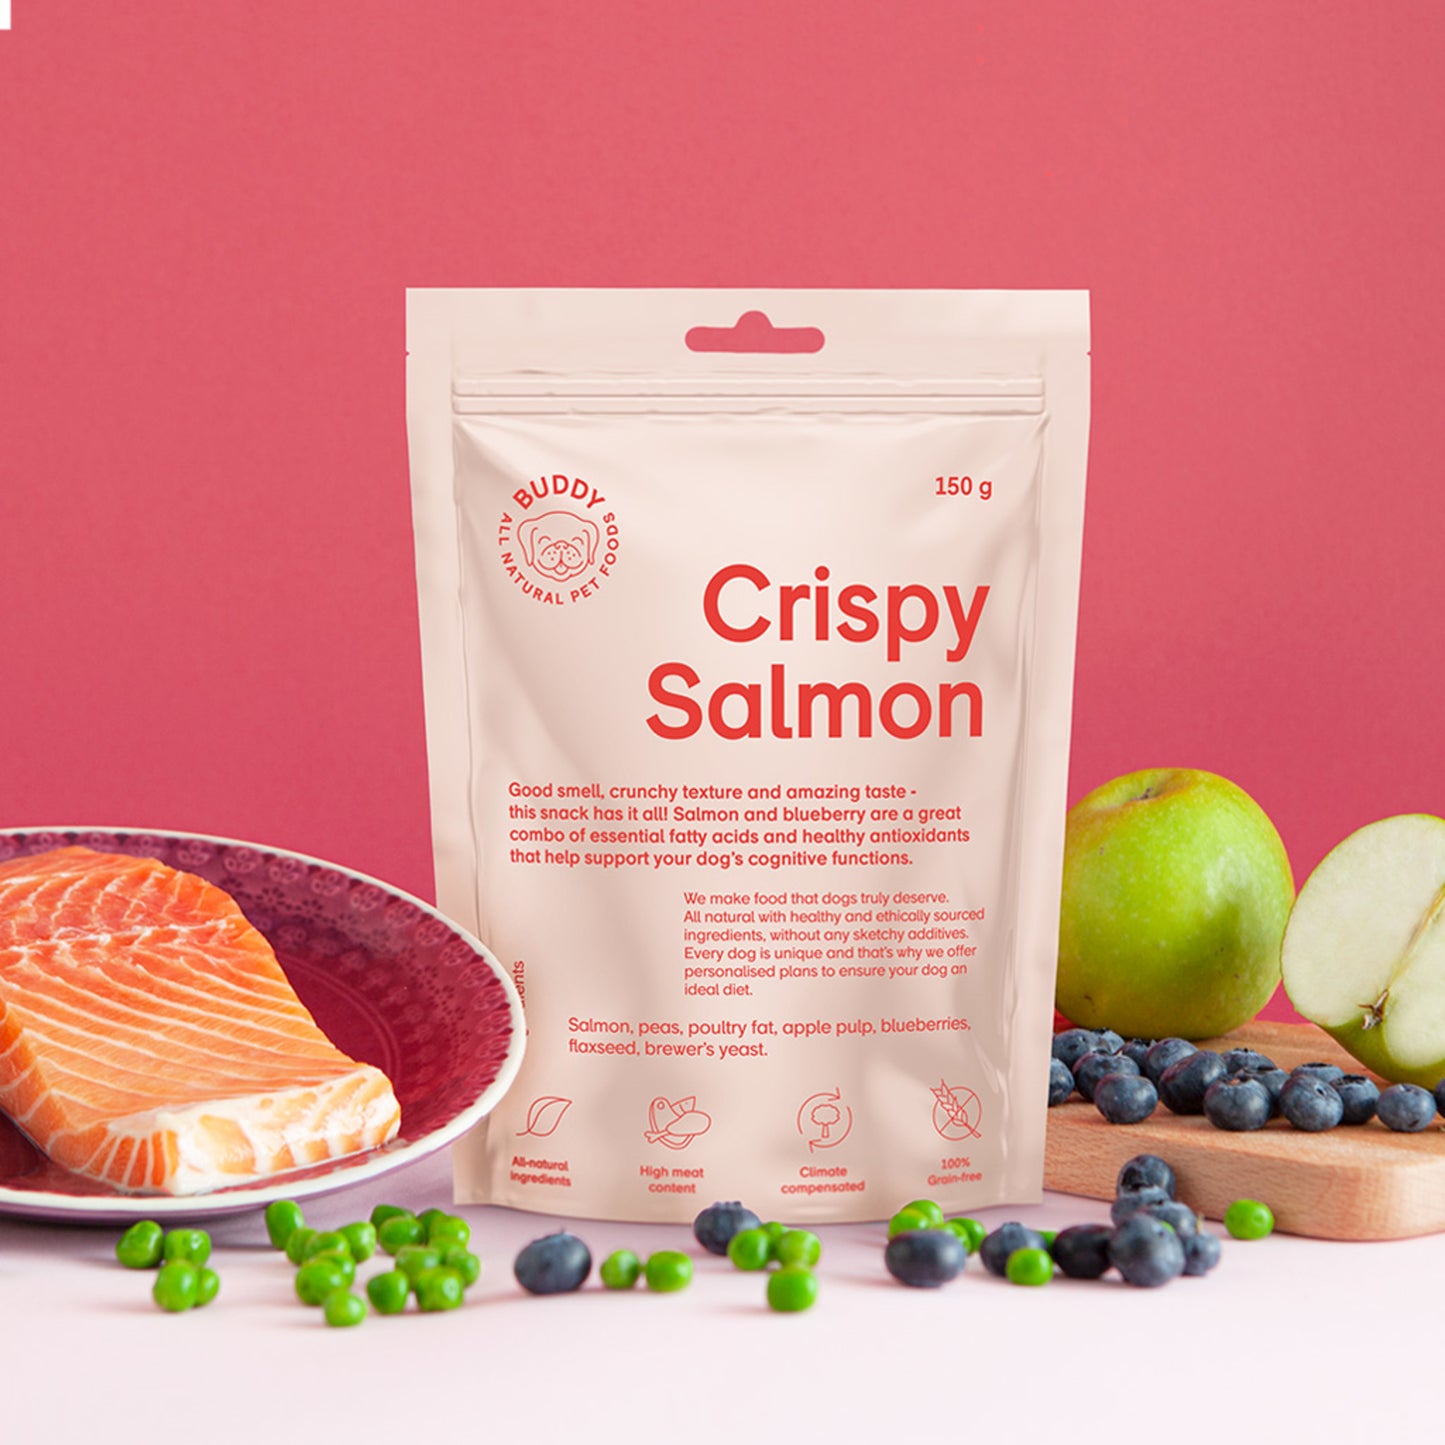 Buddy • Snack Crispy Salmon with Blueberries 150g